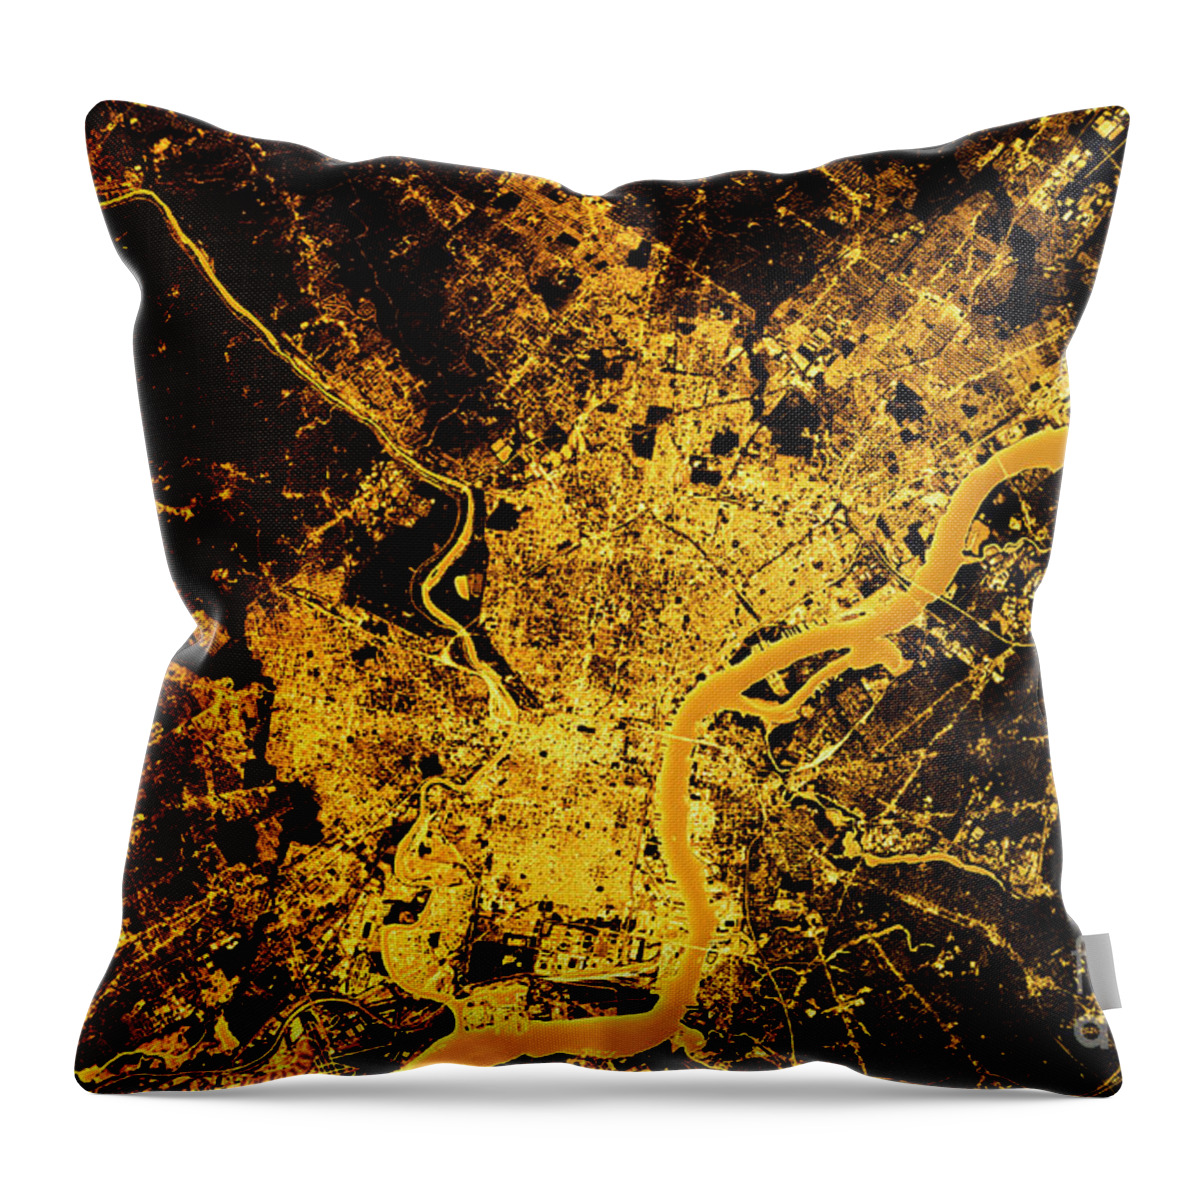 Philadelphia Throw Pillow featuring the digital art Philadelphia Abstract City Map Golden by Frank Ramspott